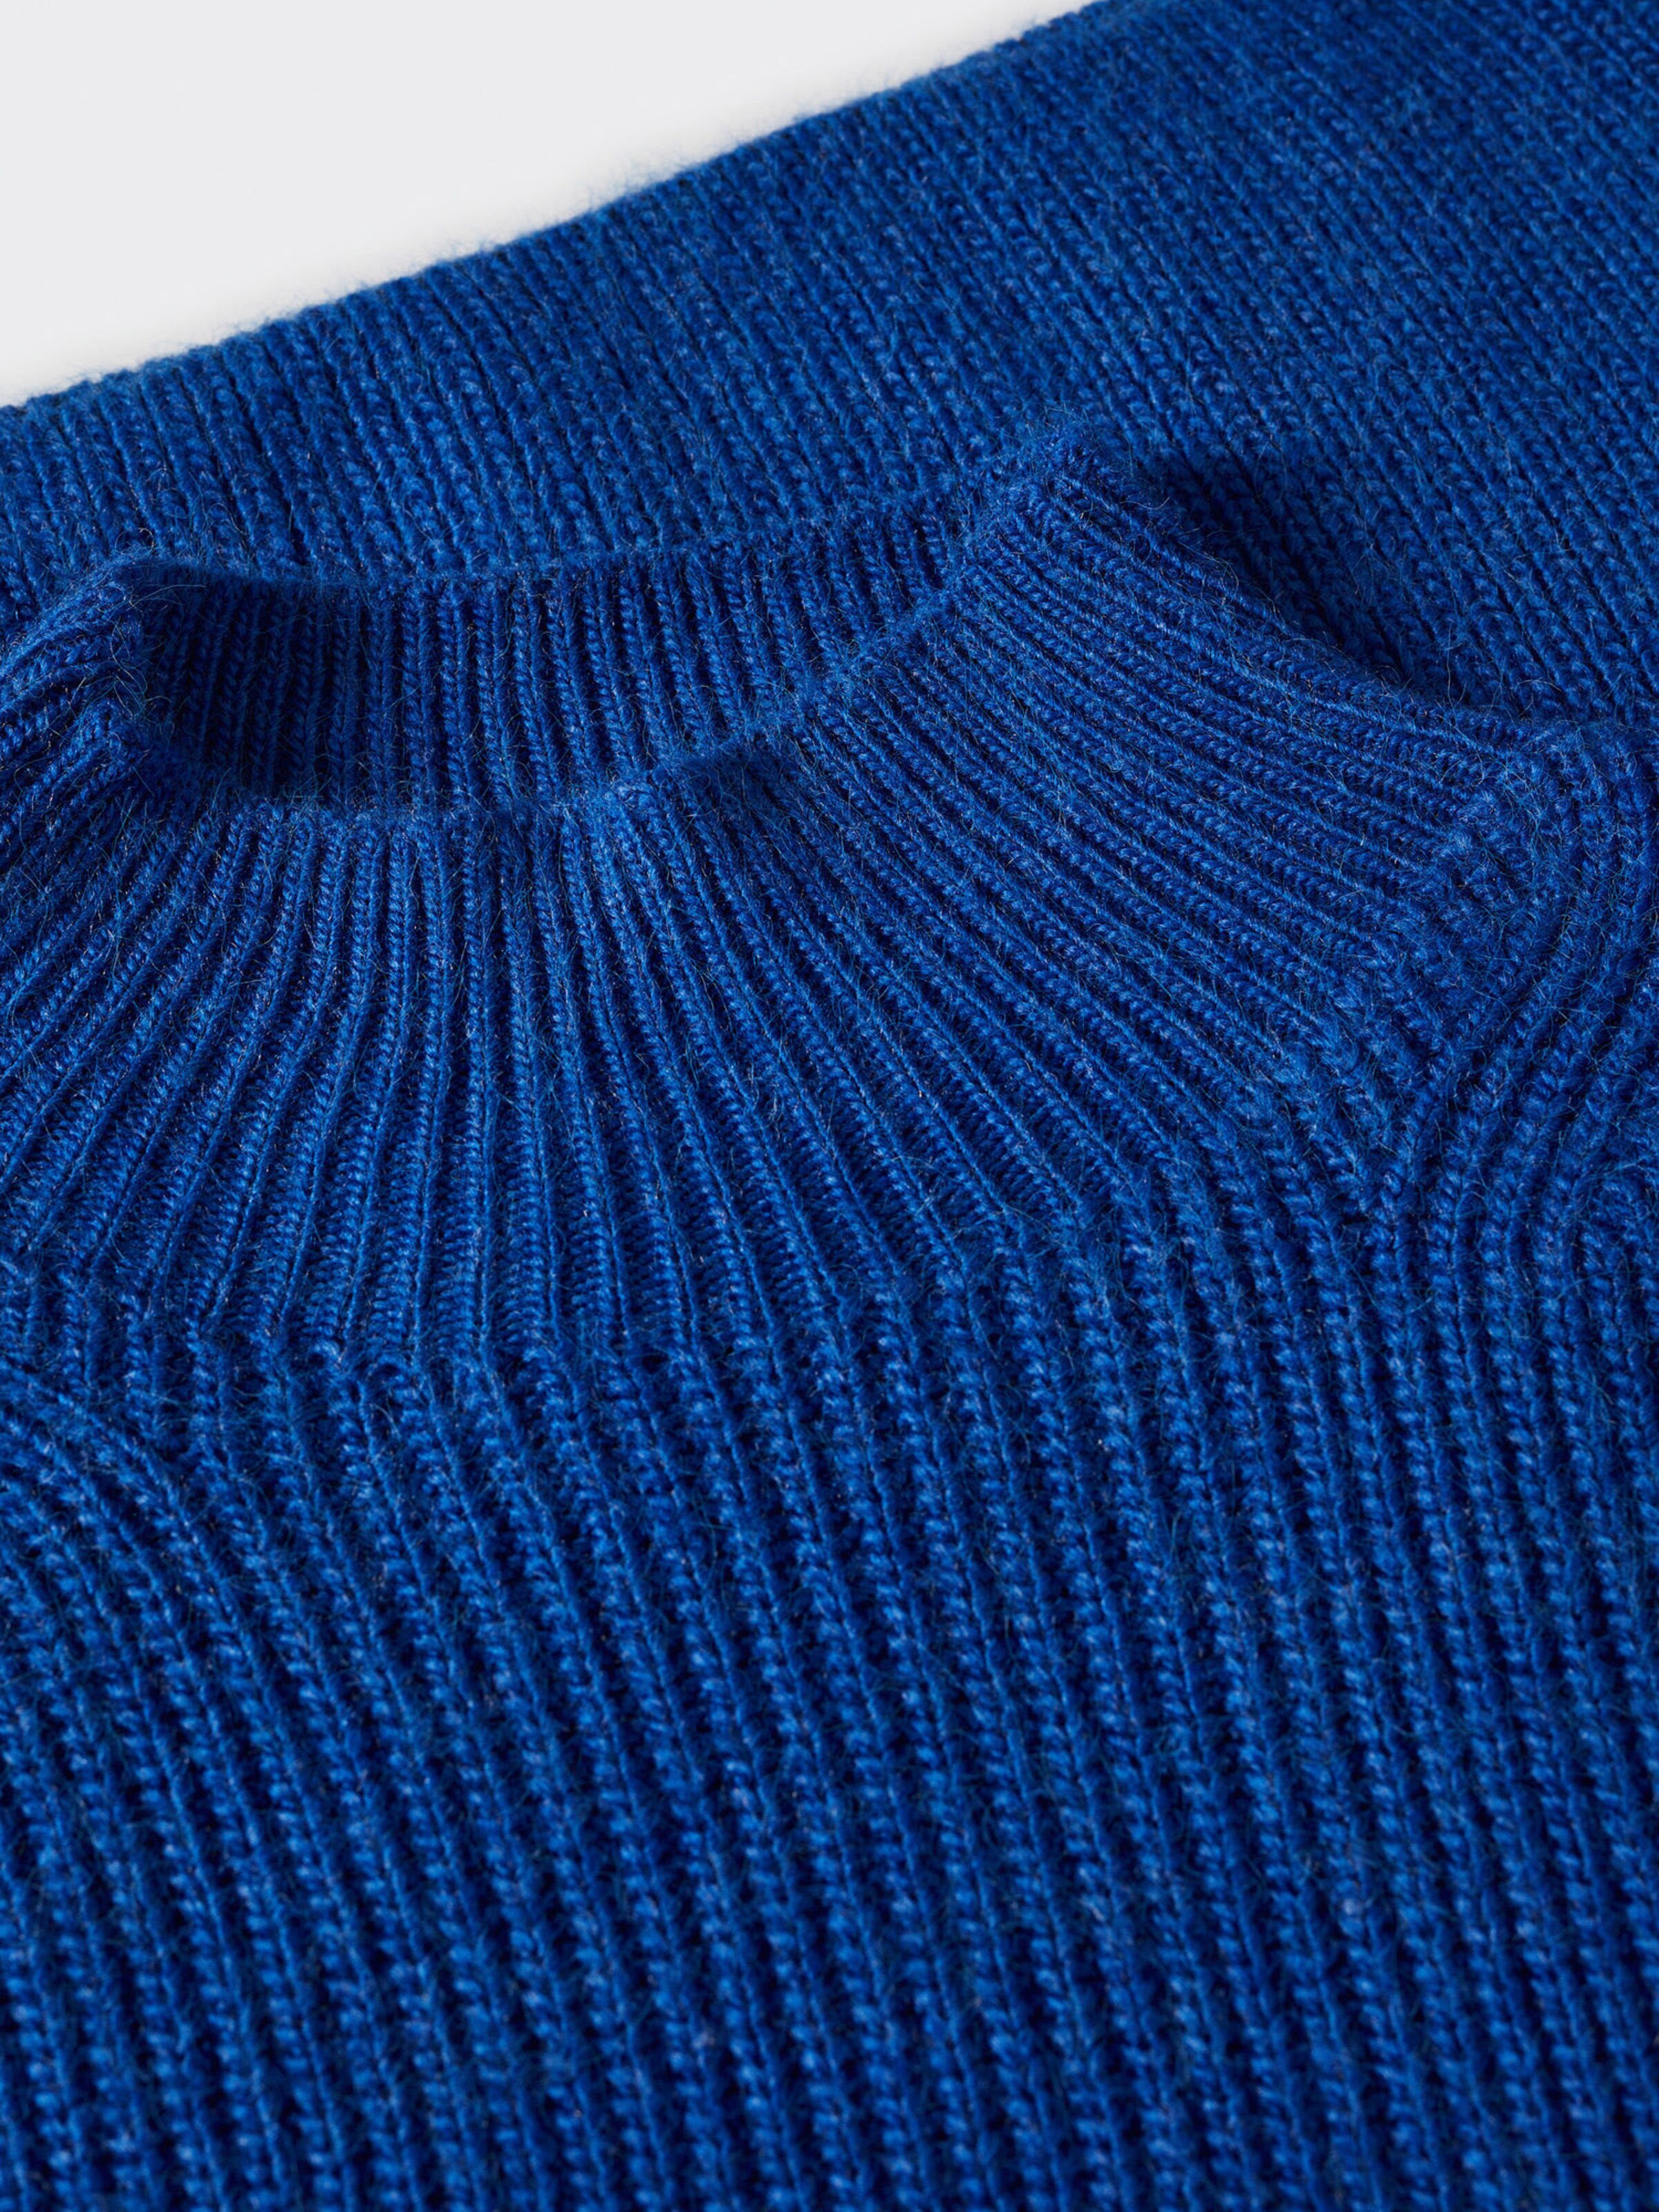 Mode Pullover 42 L sehr gut blau \u2728 \u2728 Mango Feinstrickpullover Regular Pullover Gr 